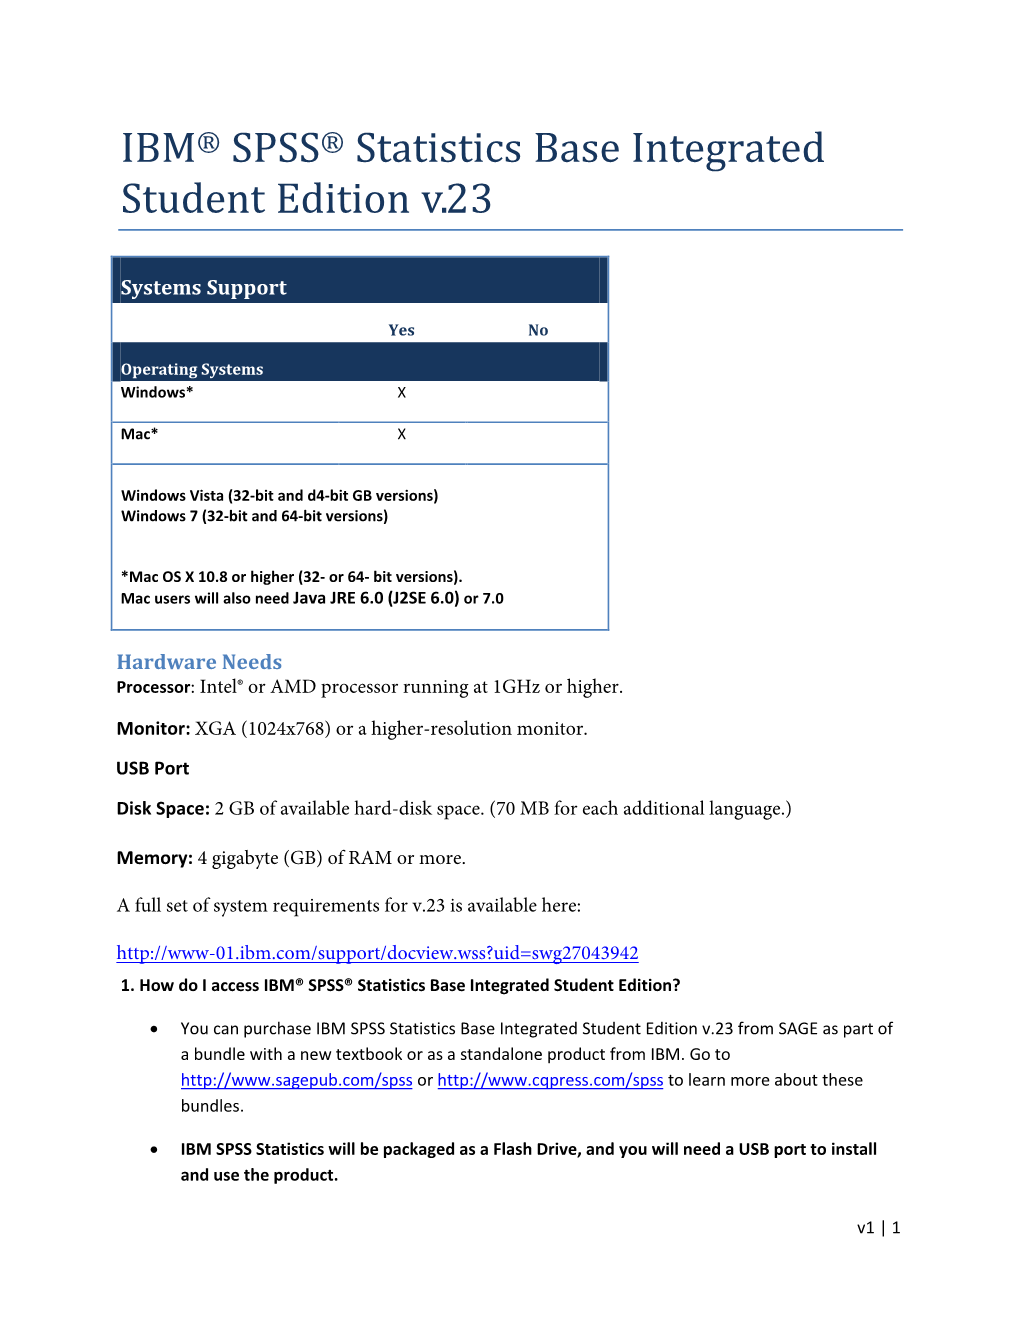 IBM® SPSS® Statistics Base Integrated Student Edition V.23